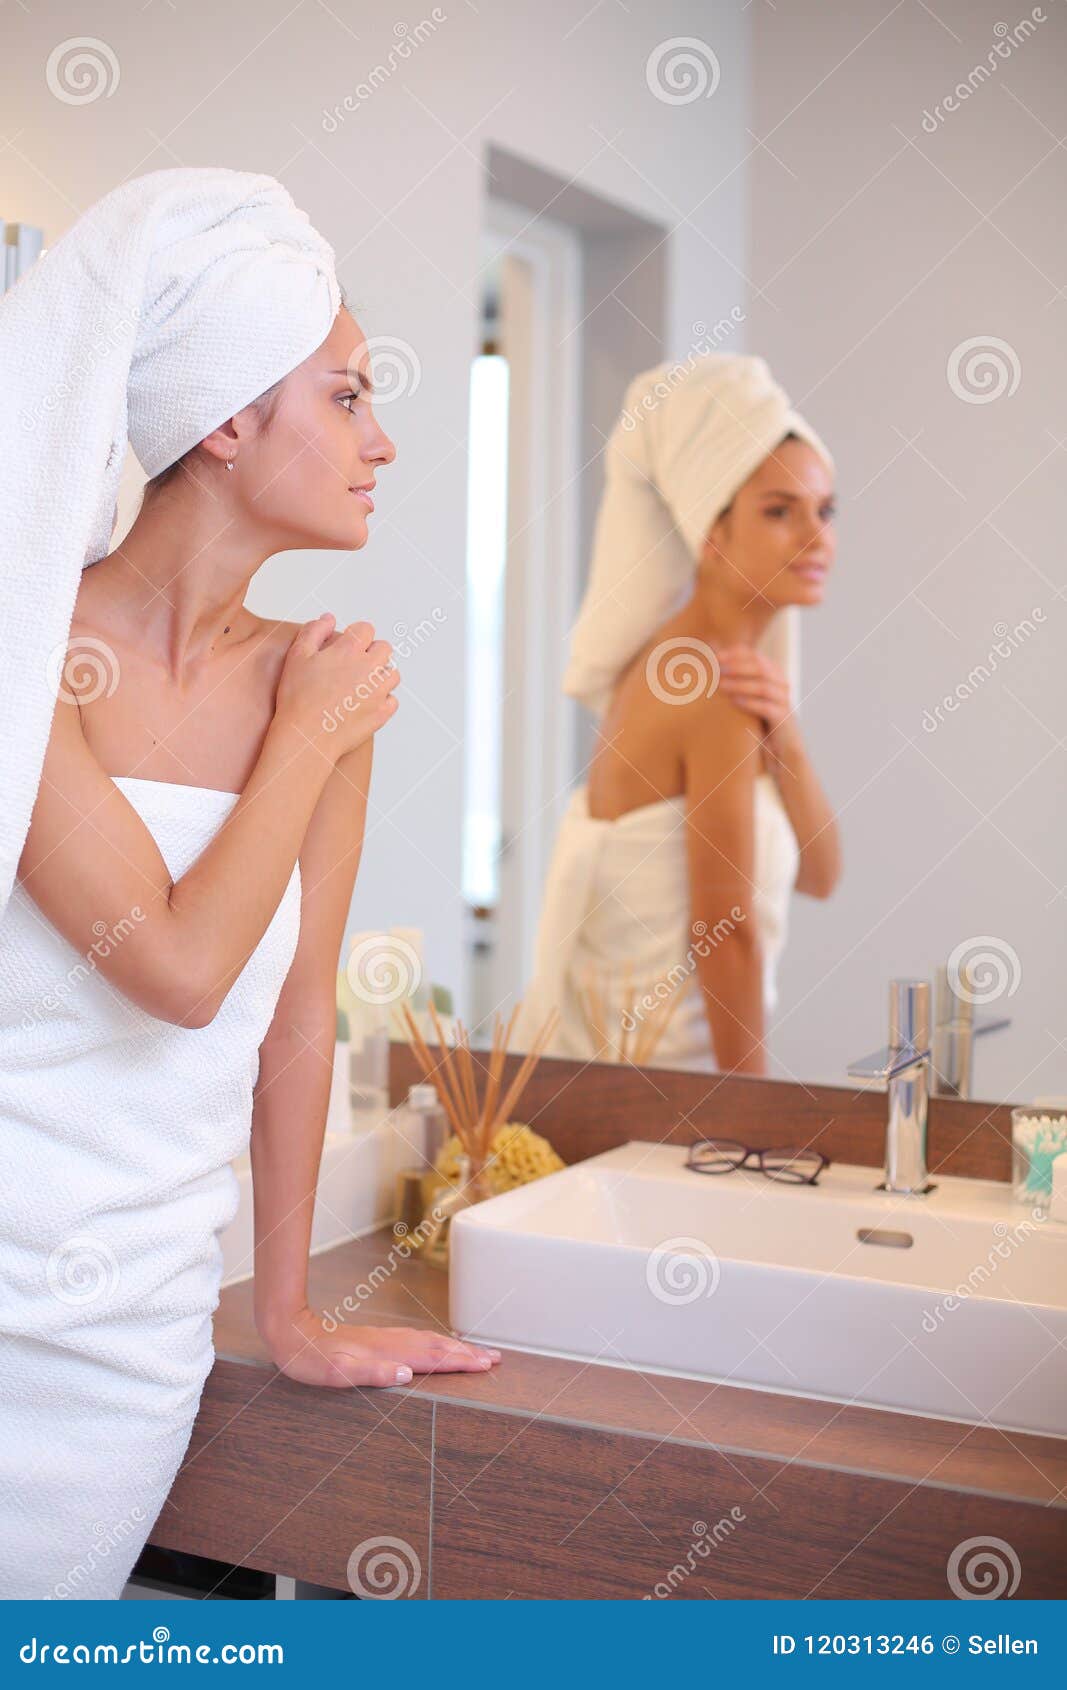 Упало полотенце перед. Фотосессия в ванной перед зеркалом. Девушка в полотенце перед зеркалом. Девушка у зеркала в ванной. Женщина перед зеркалом в ванной.